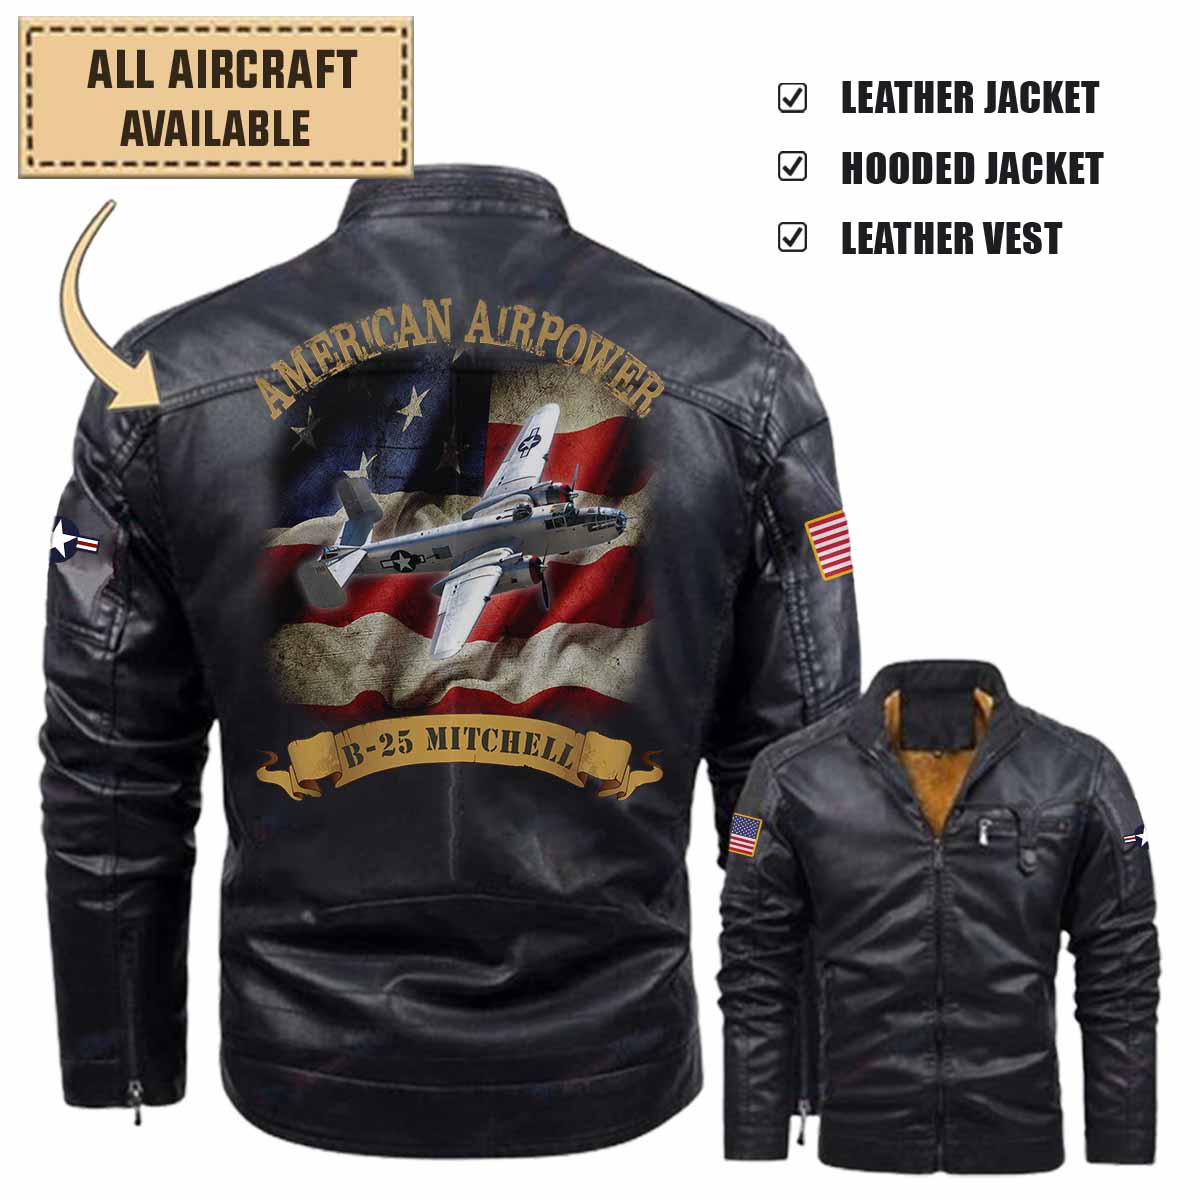 b 25 mitchell b25aircraft leather jacket and vest tst06